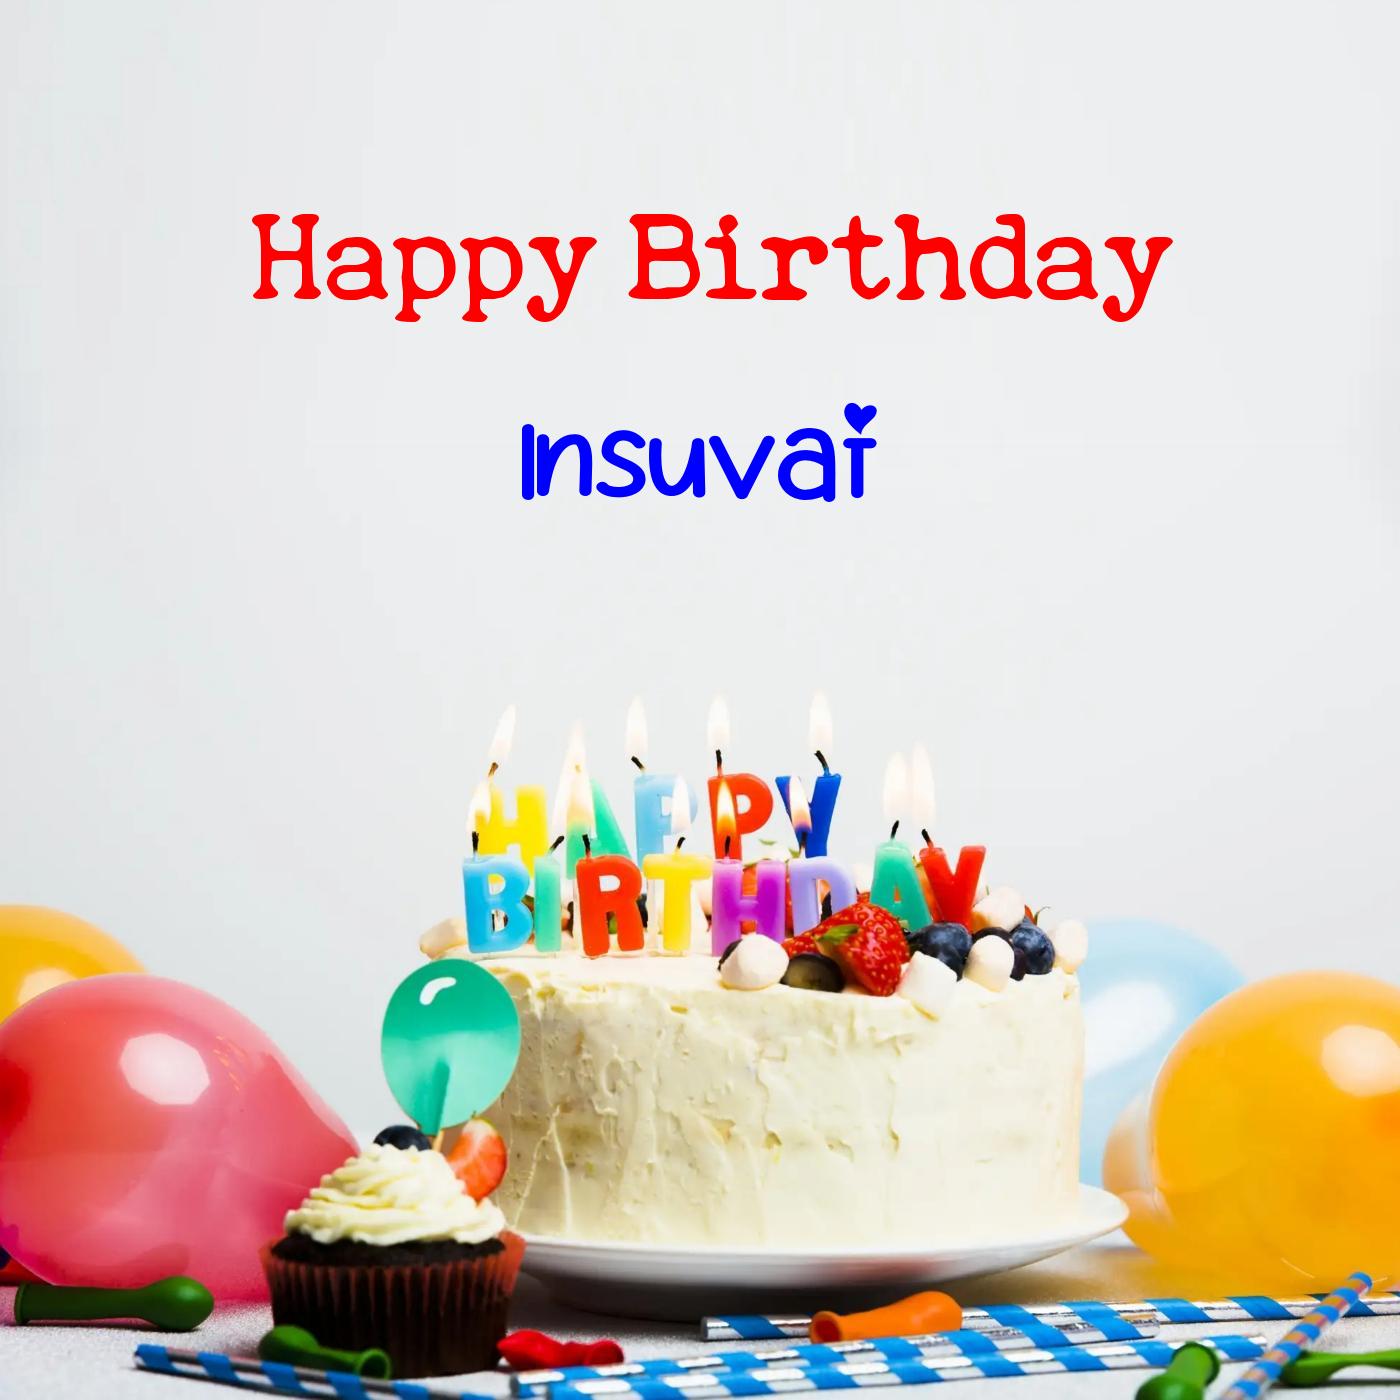 Happy Birthday Insuvai Cake Balloons Card